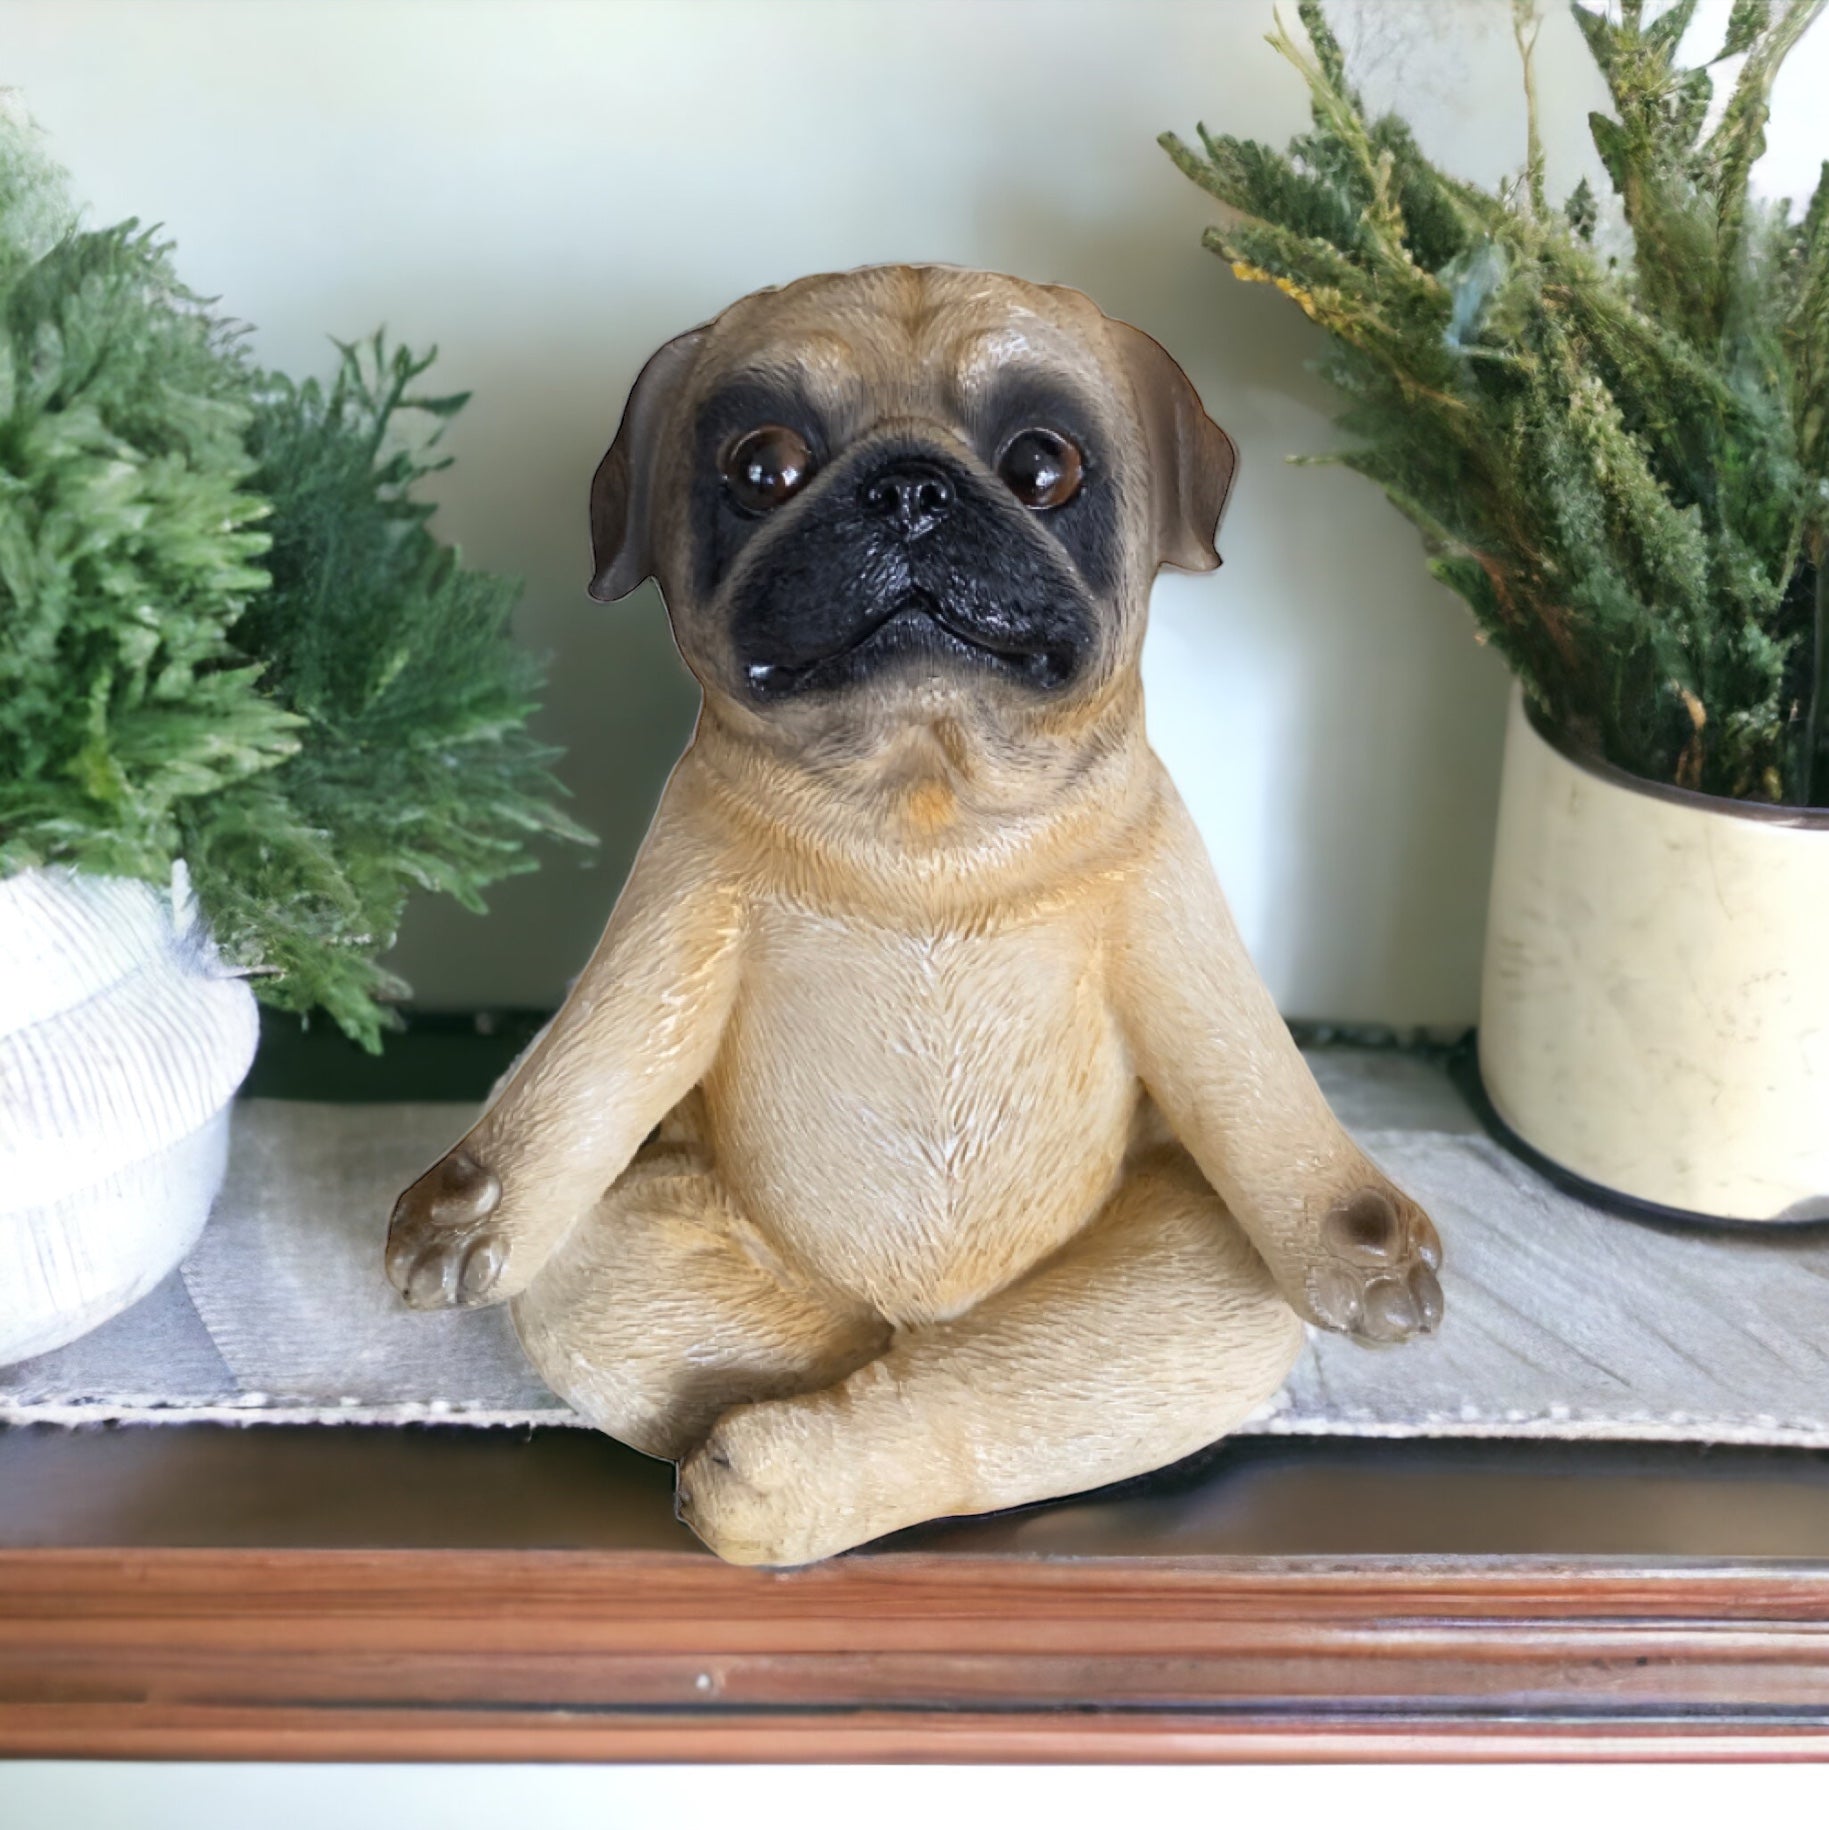 Dog Pug Yoga Meditation Zen Ornament - The Renmy Store Homewares & Gifts 